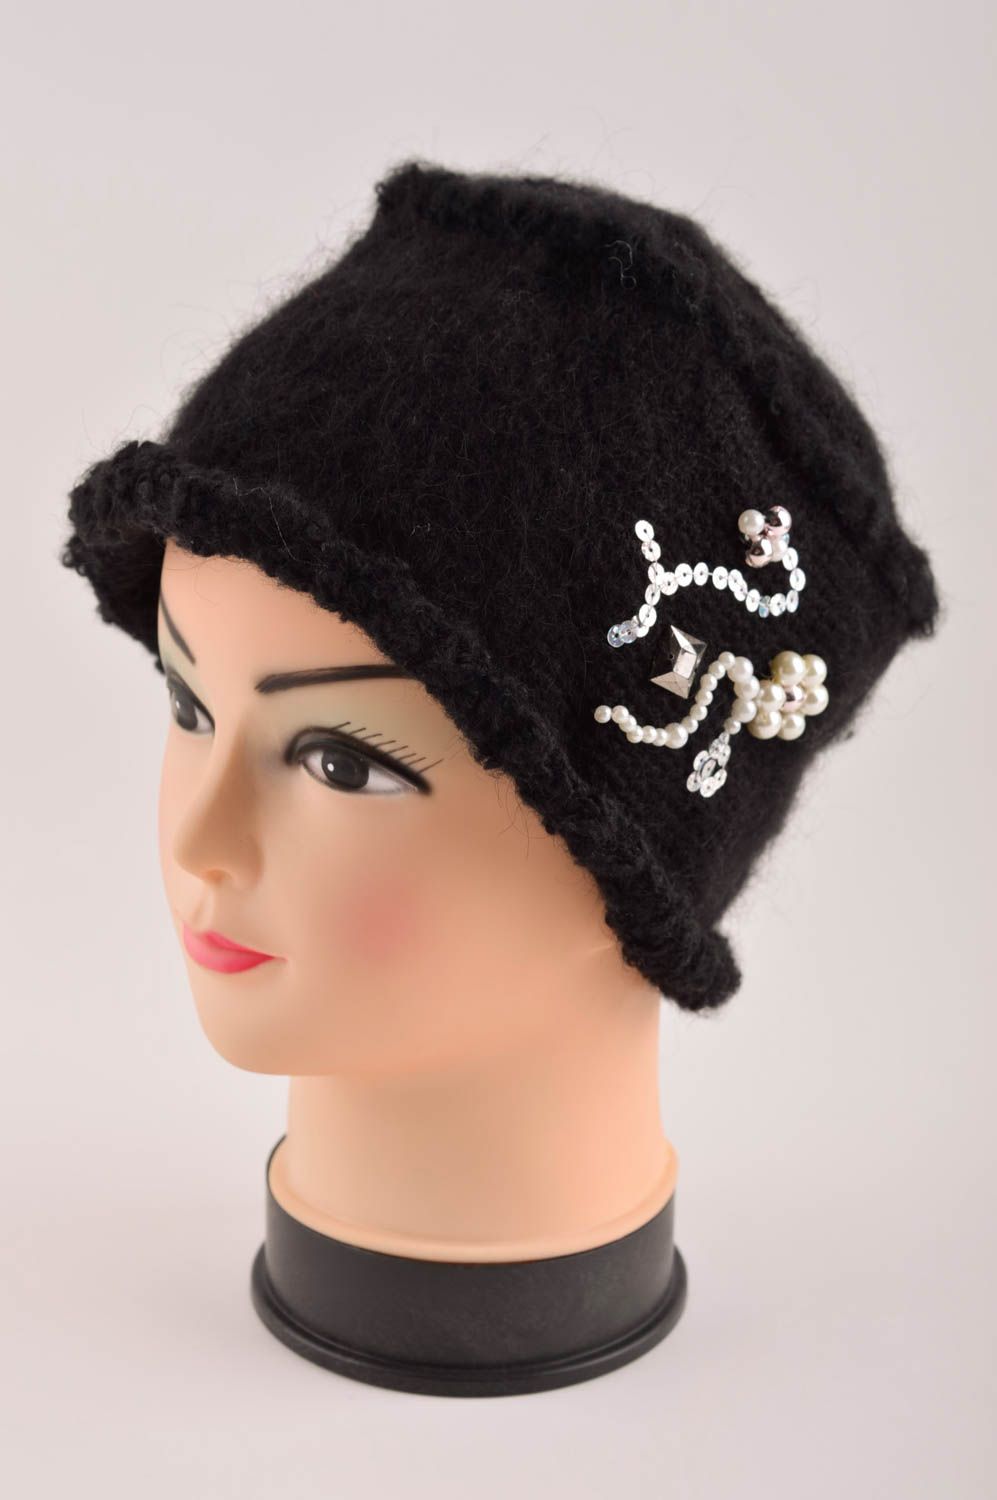 Handmade warm hat unusual hat for girls crocheted hat warm hat for winter photo 2